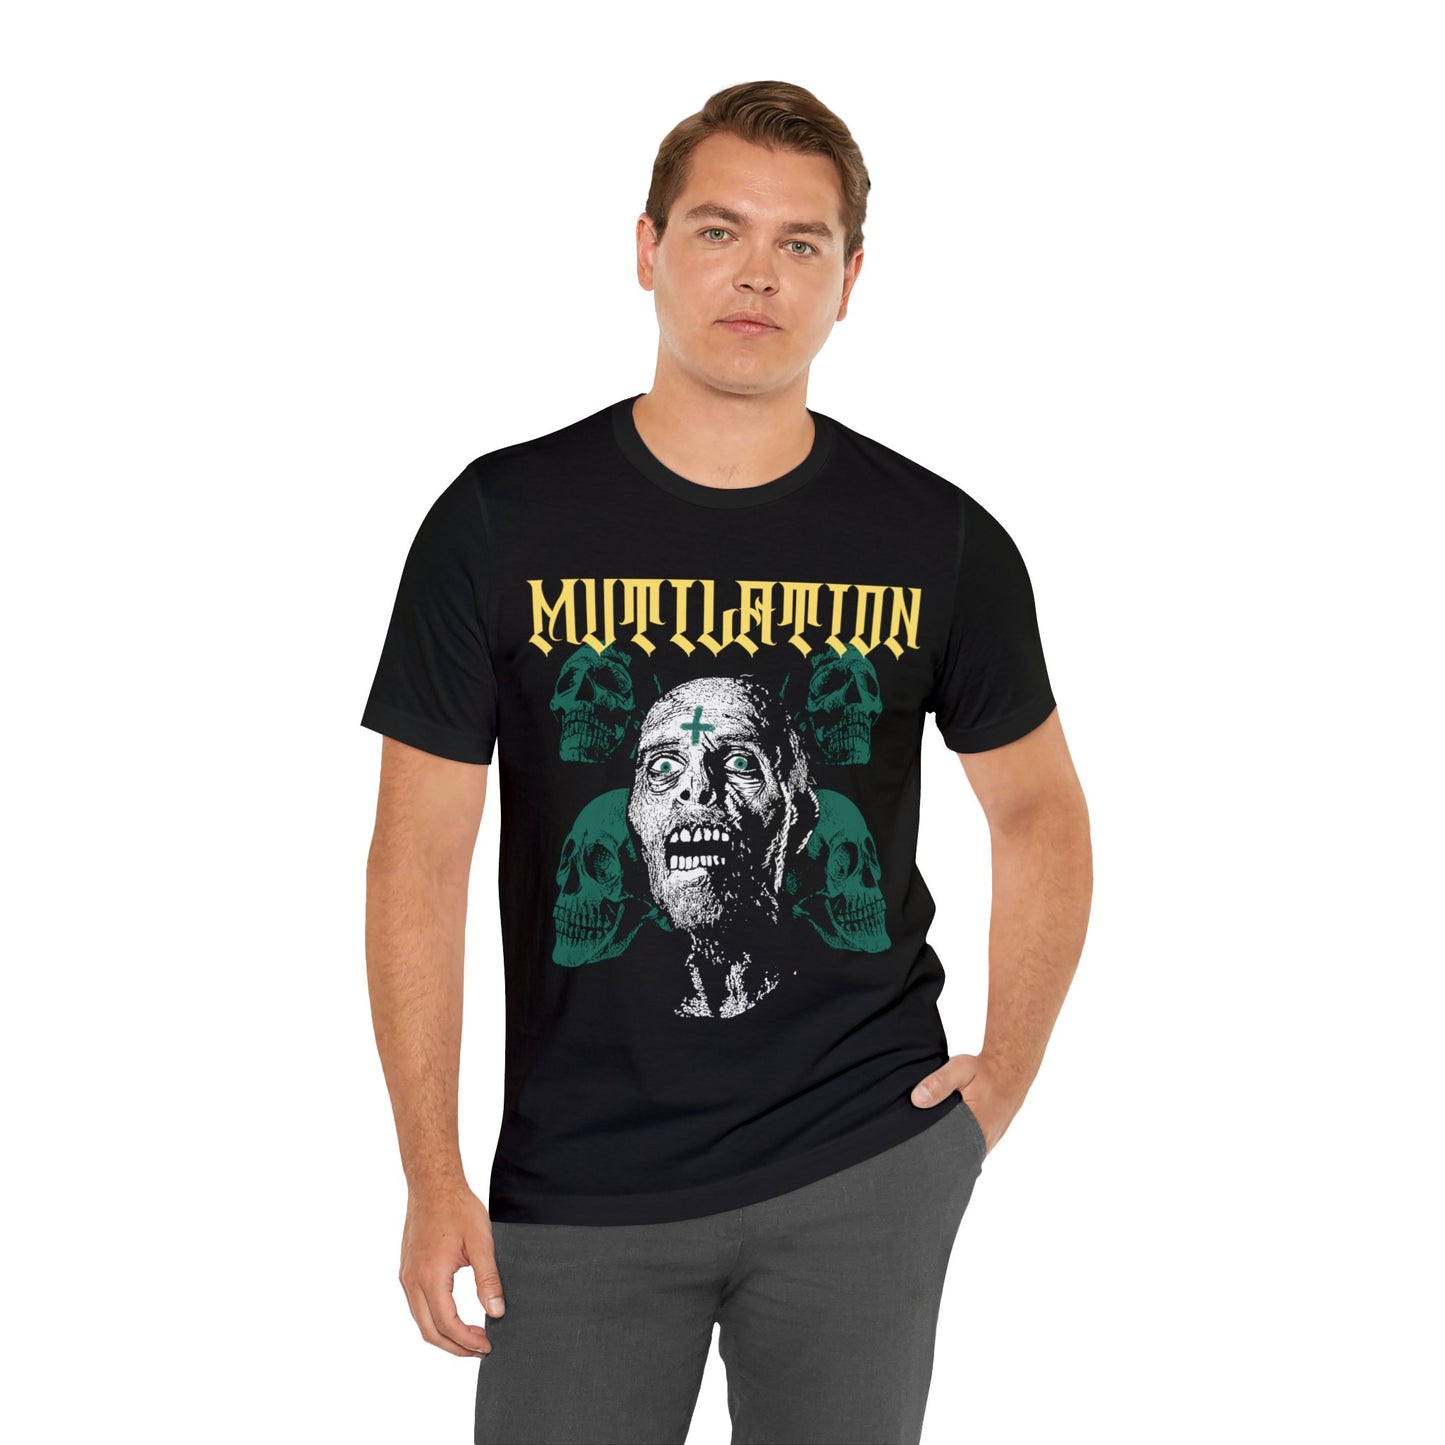 Mutilation T-Shirt